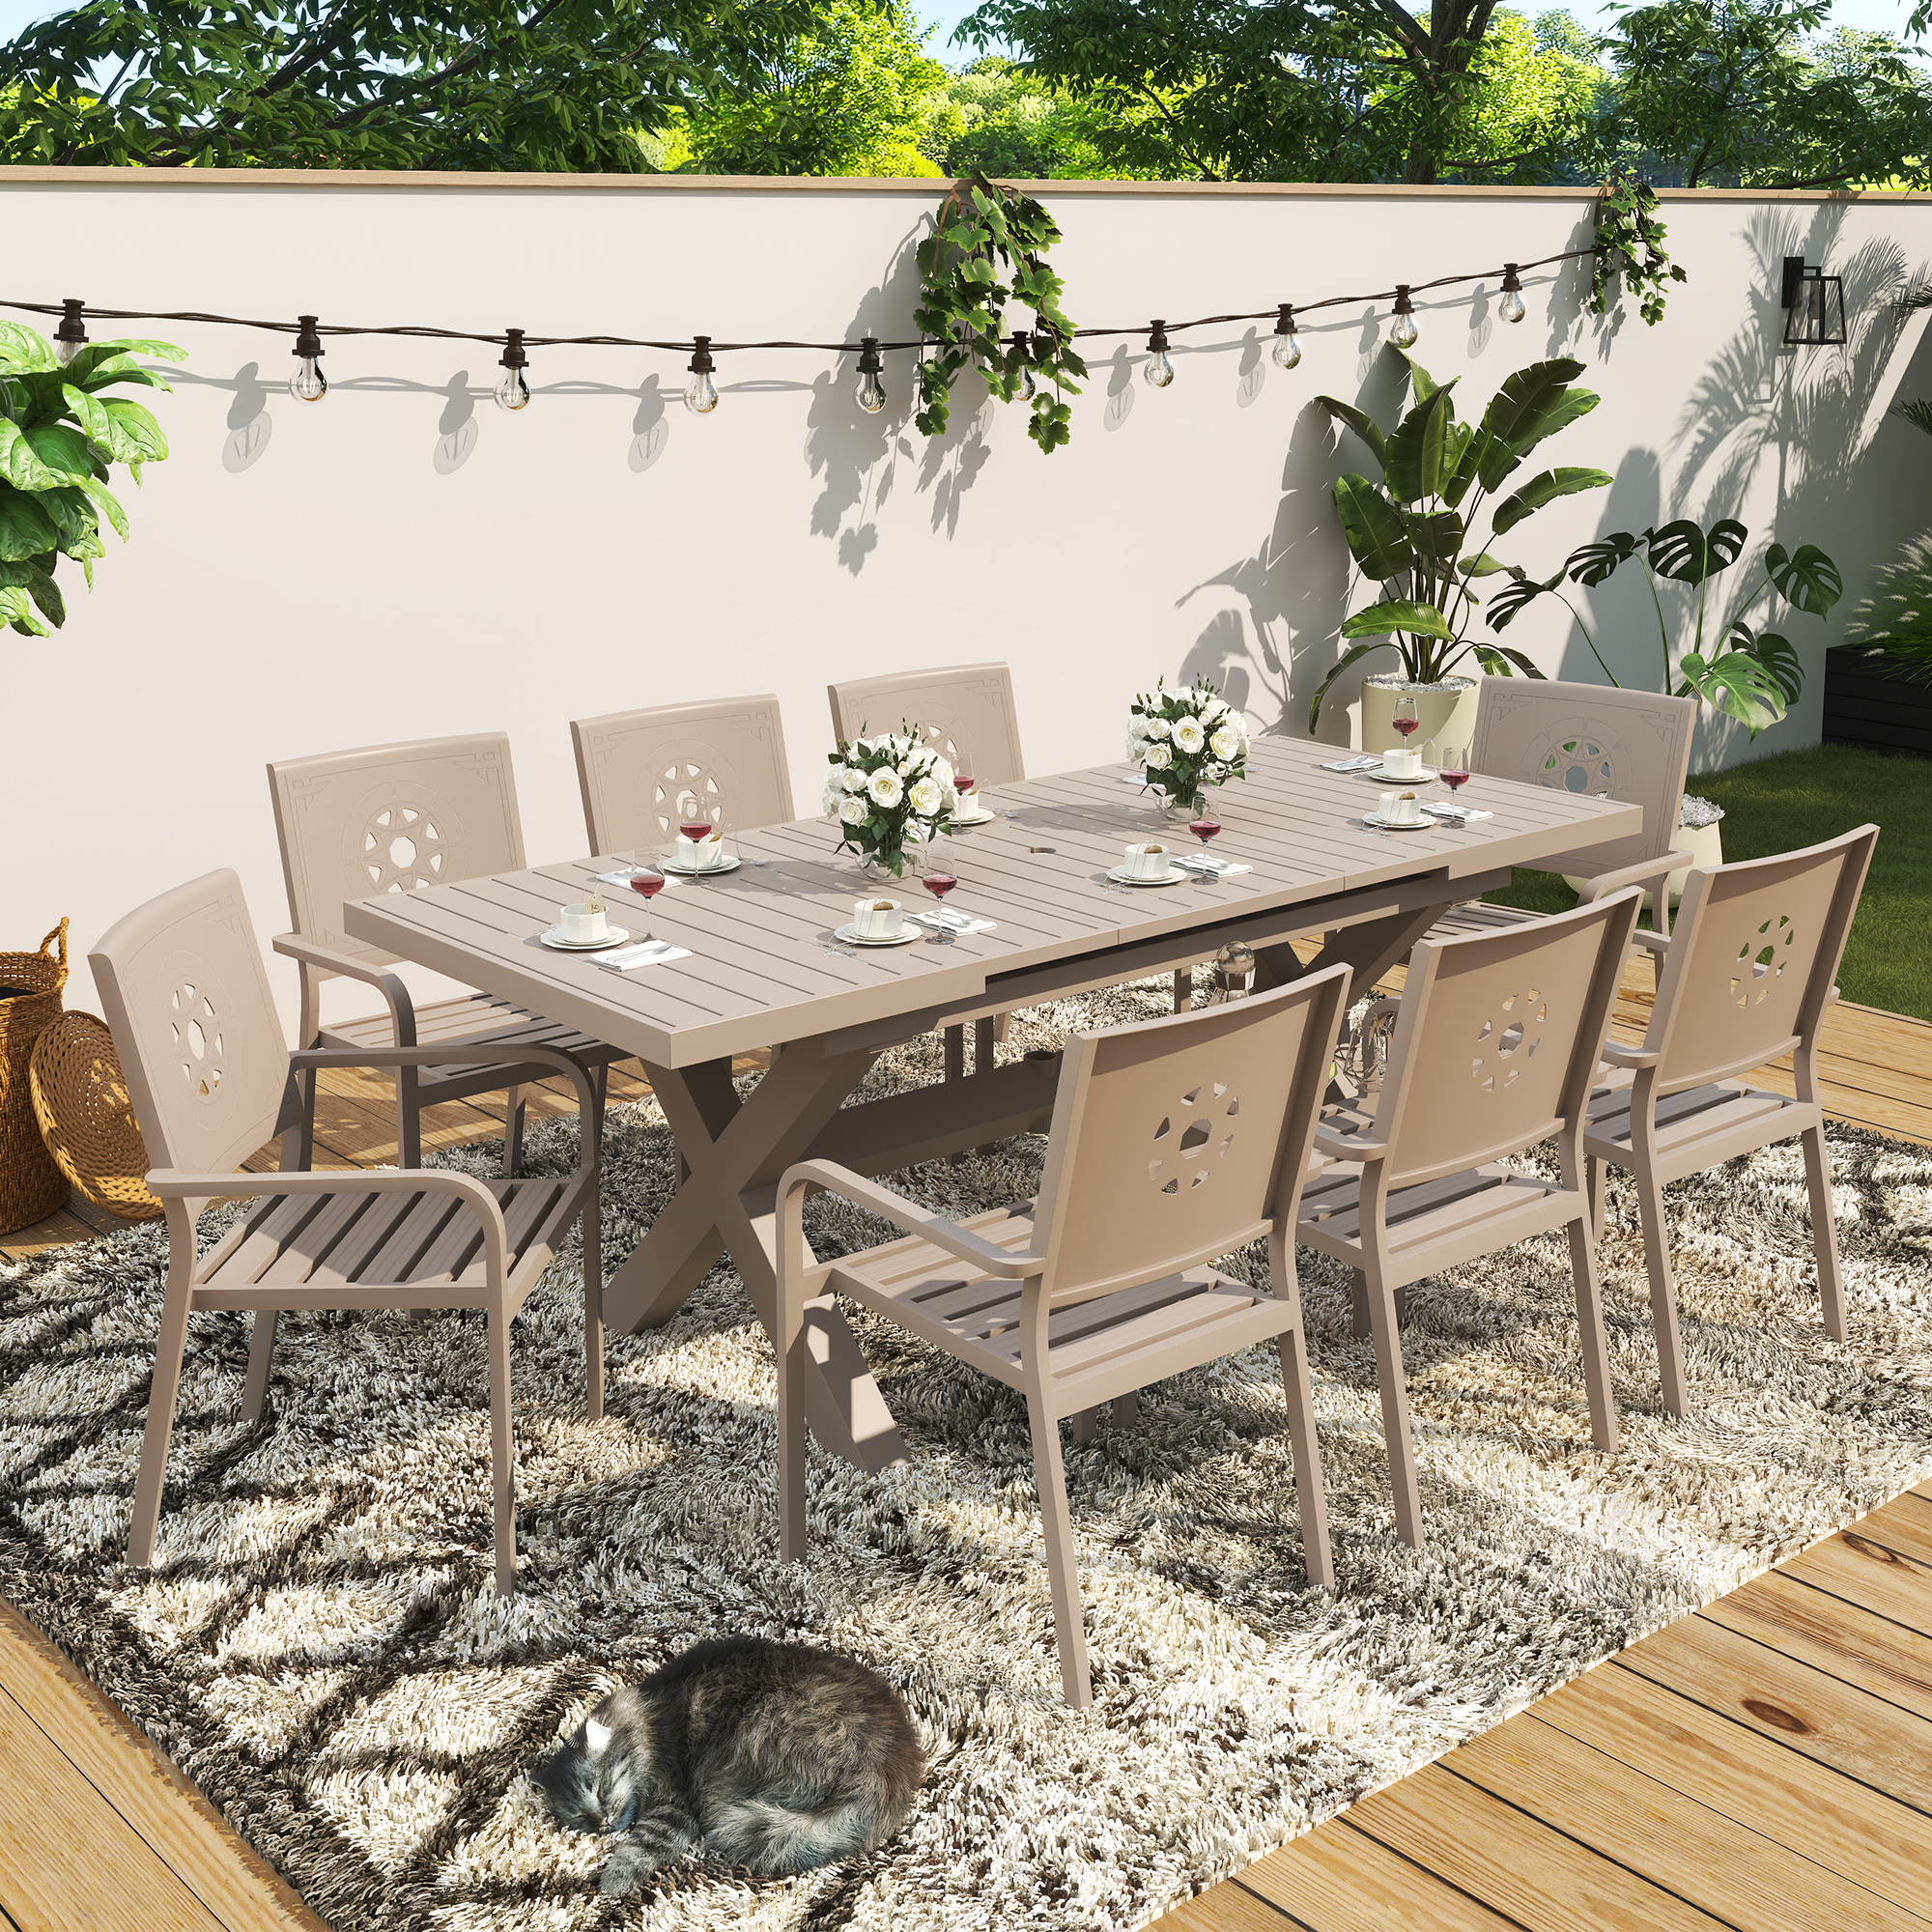 Modern outdoor garden restaurant furniture waterproof tables and chairs